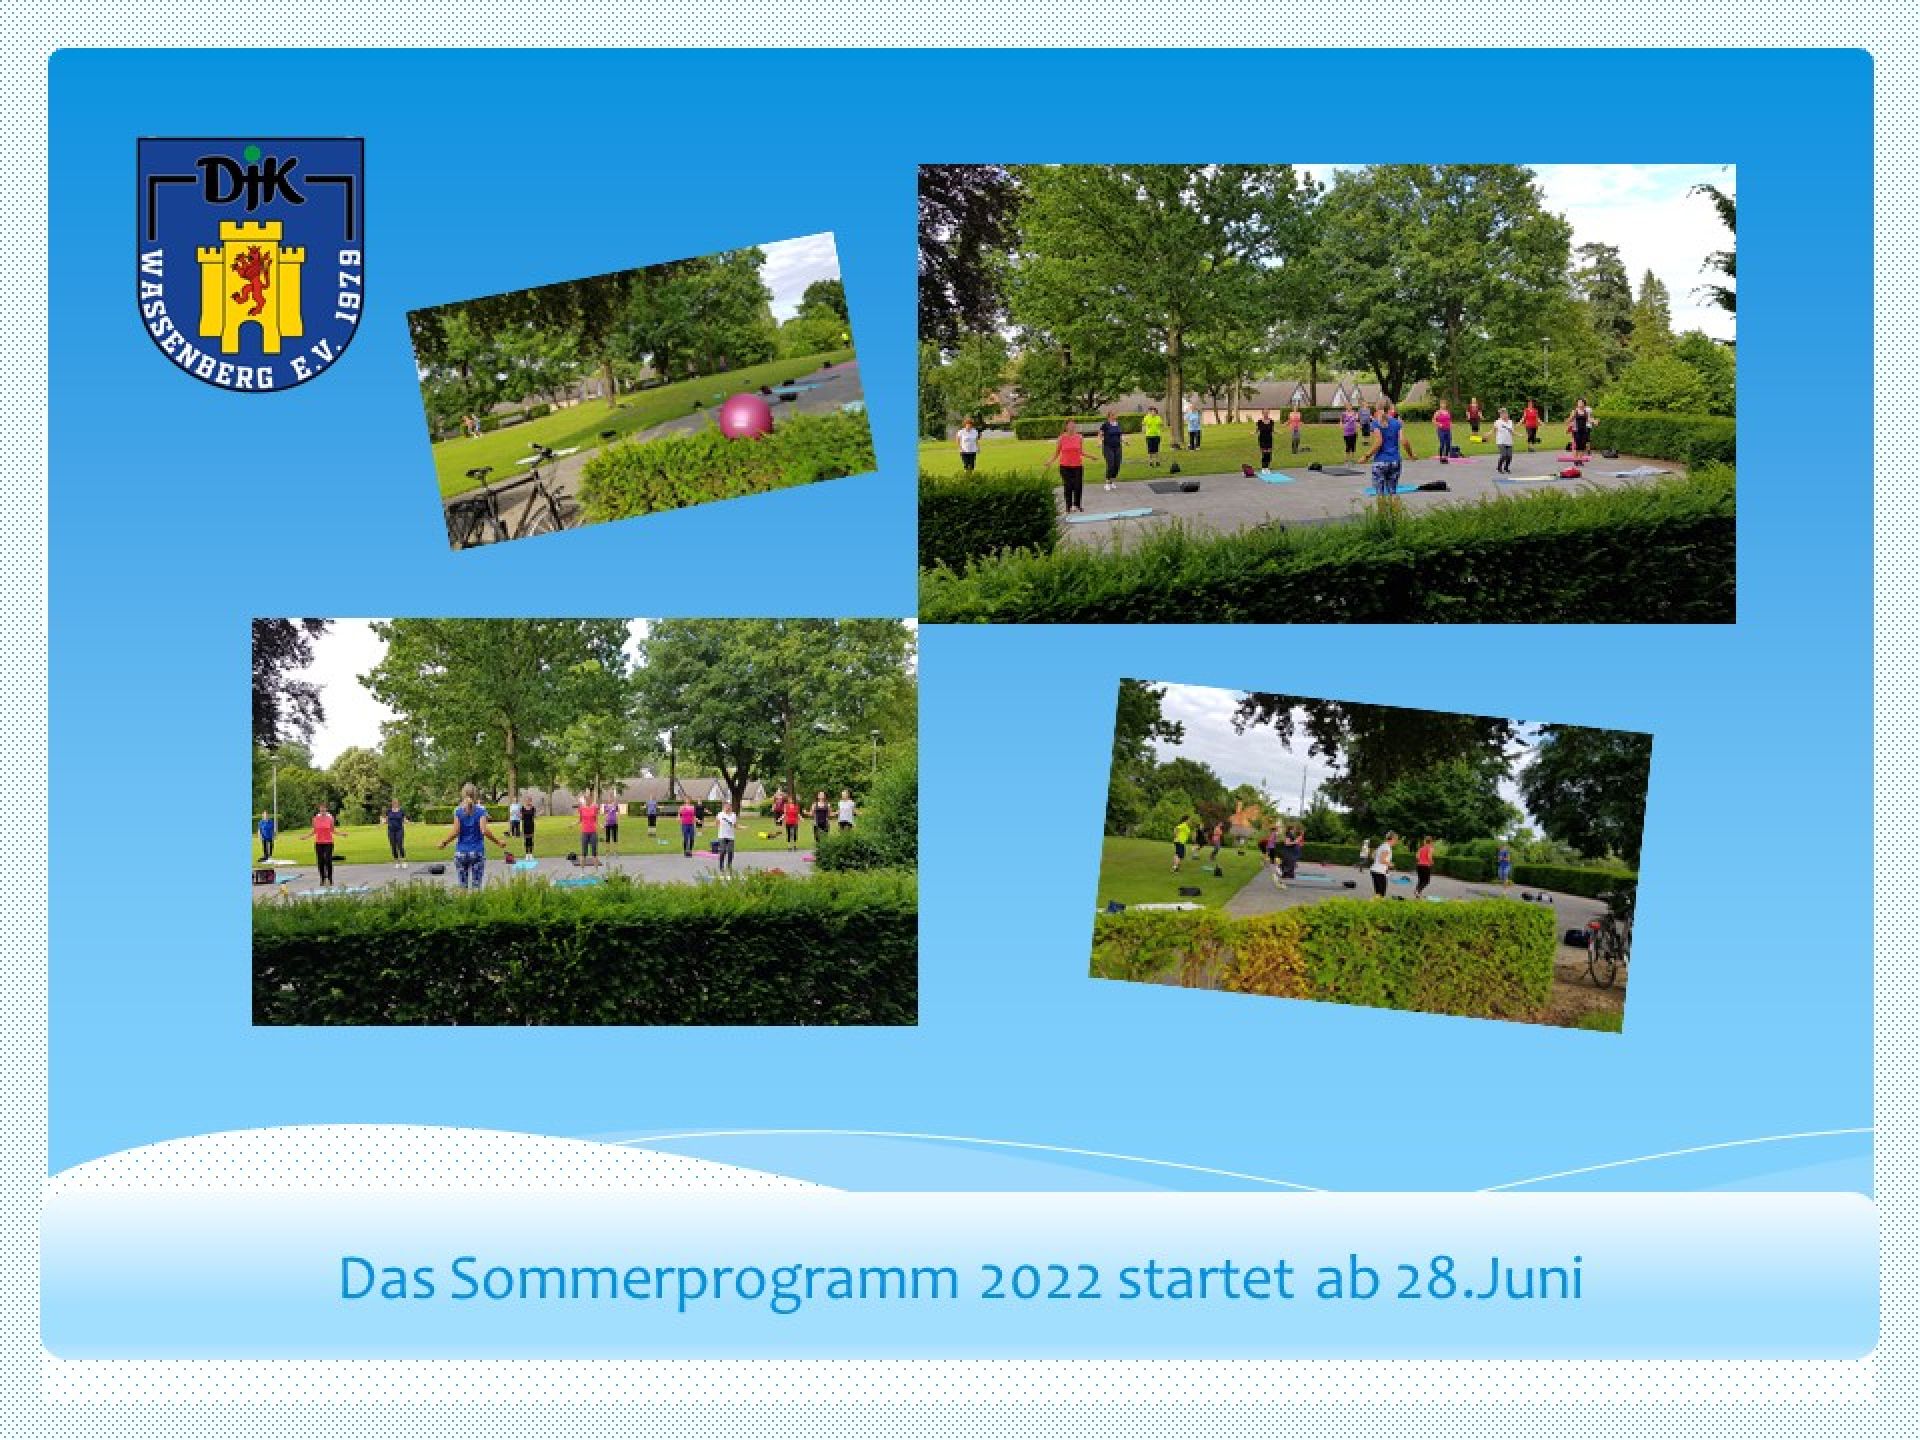 DJK Sommerprogramm 2022